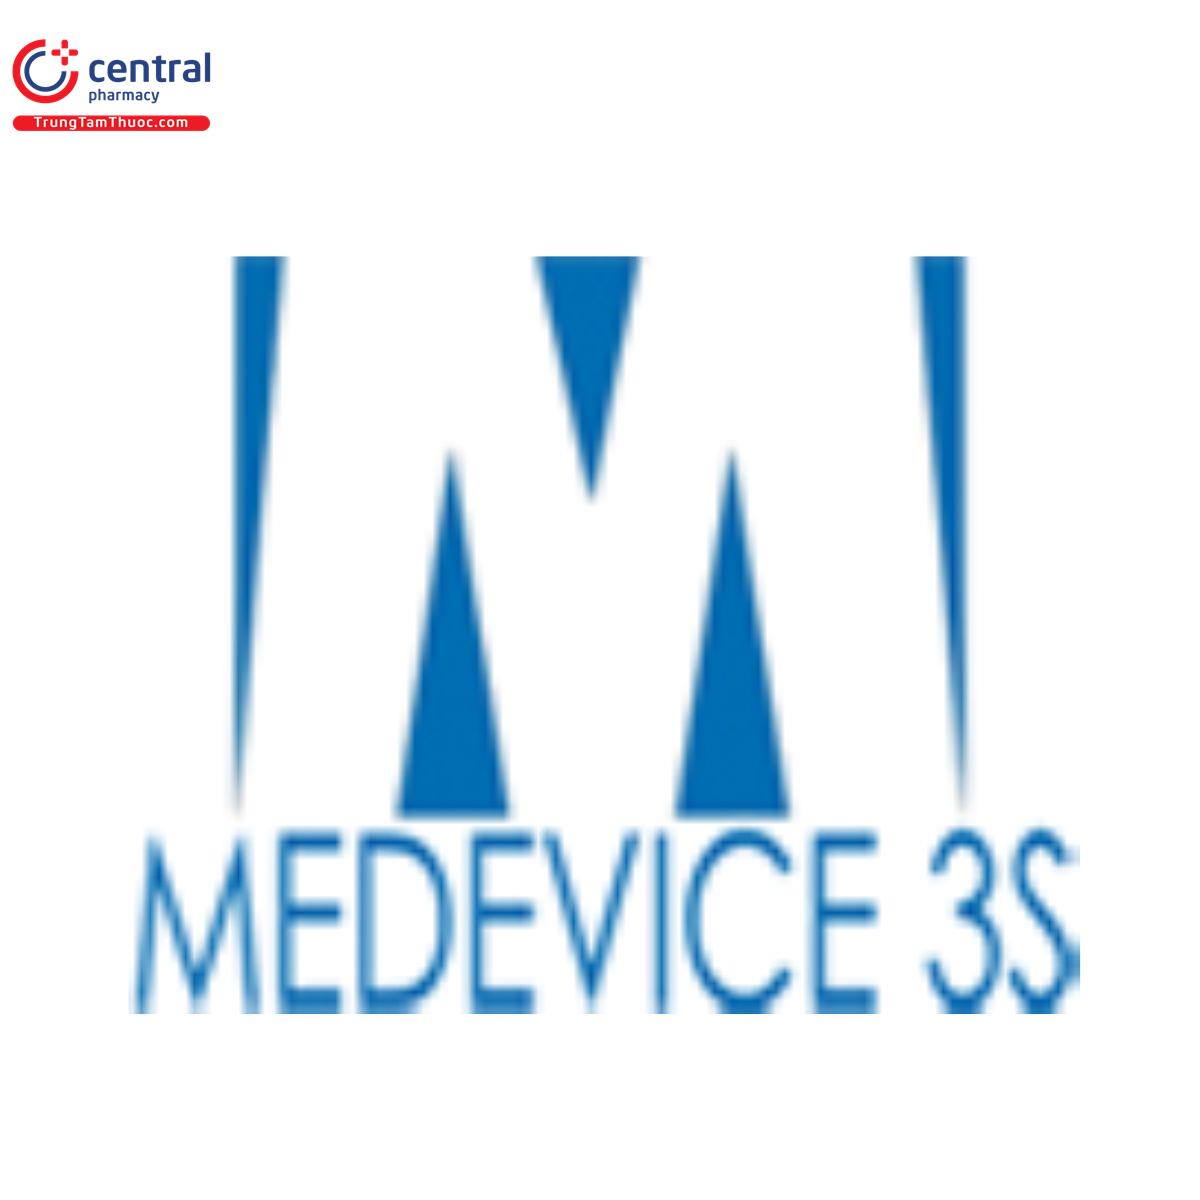 Medevice 3S